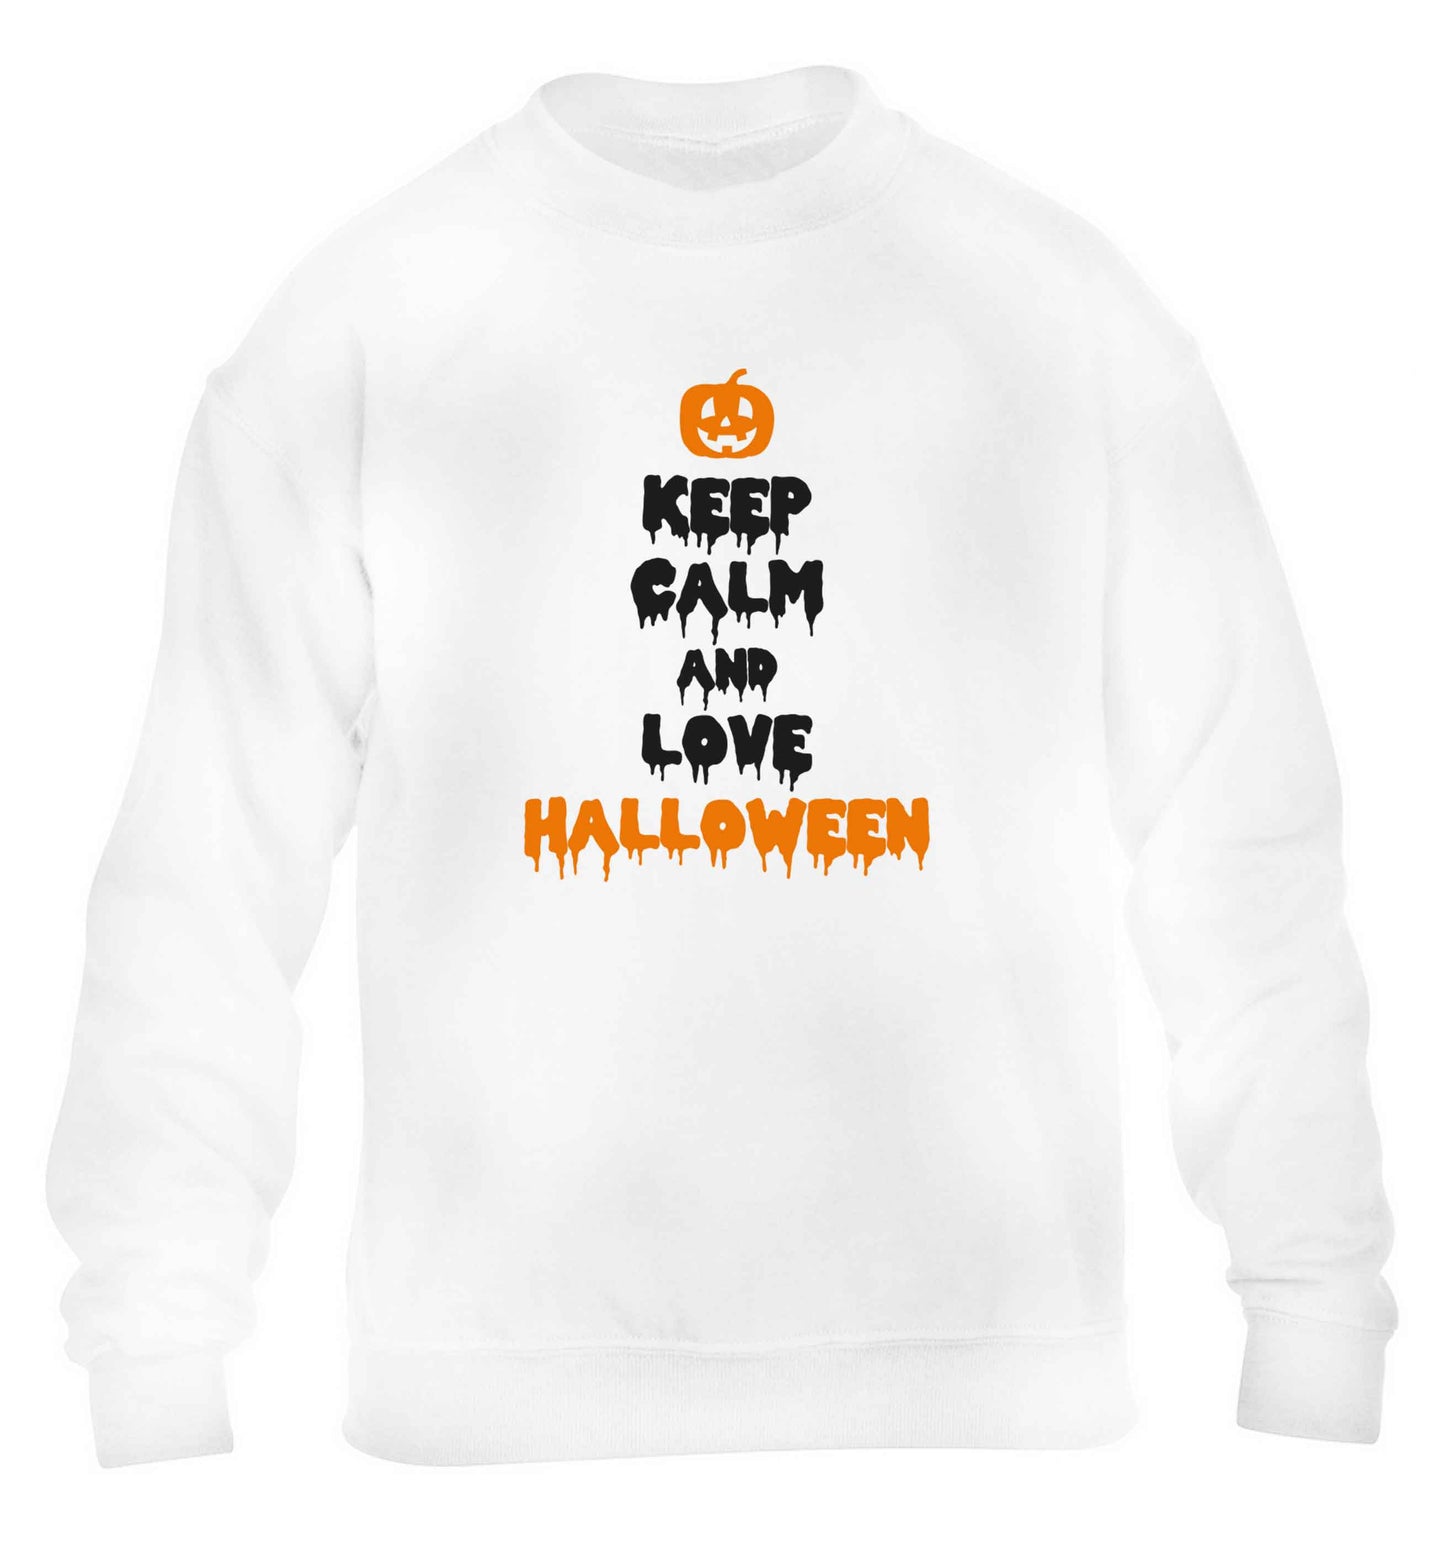 Keep calm and love halloween children's white sweater 12-13 Years